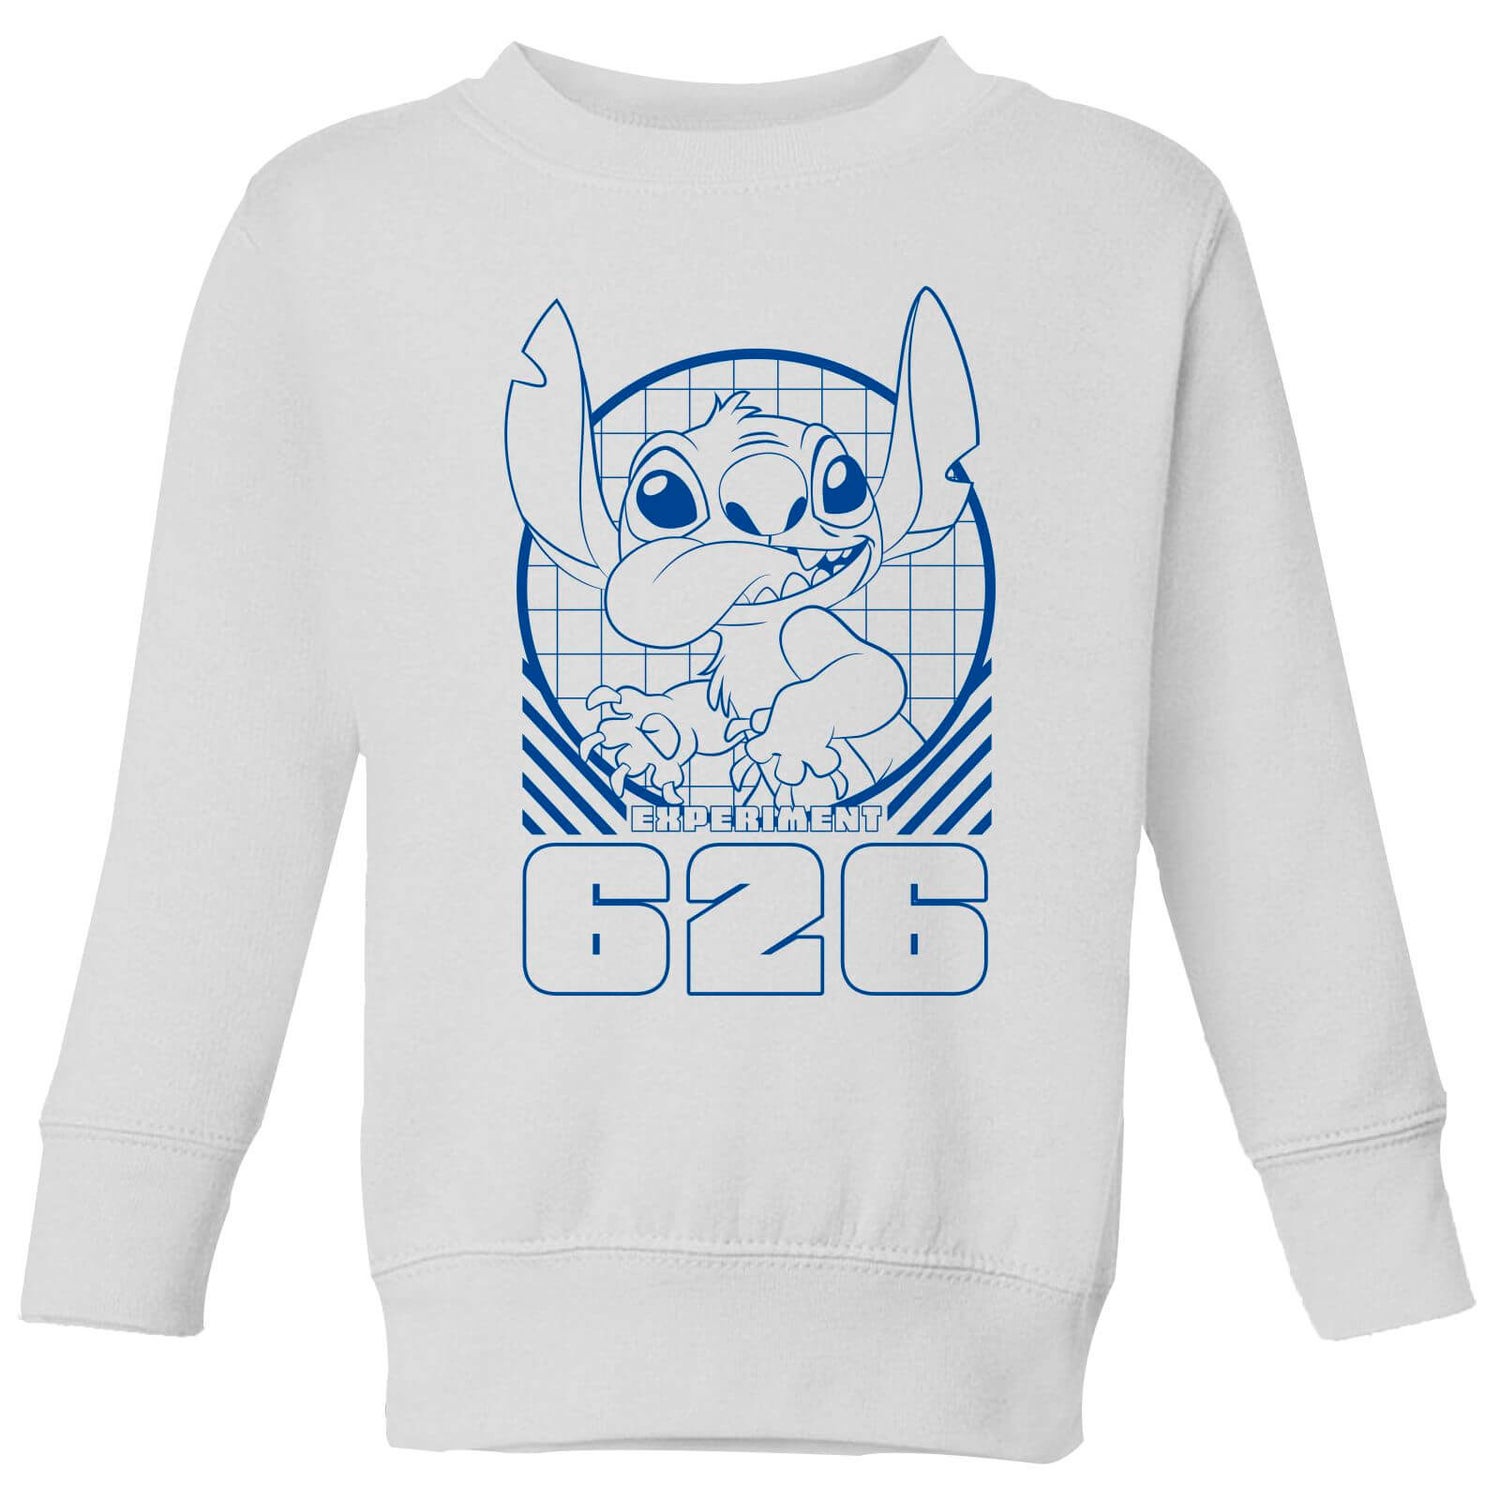 Lilo And Stitch Warning Experiment 626 Kids' Sweatshirt - White